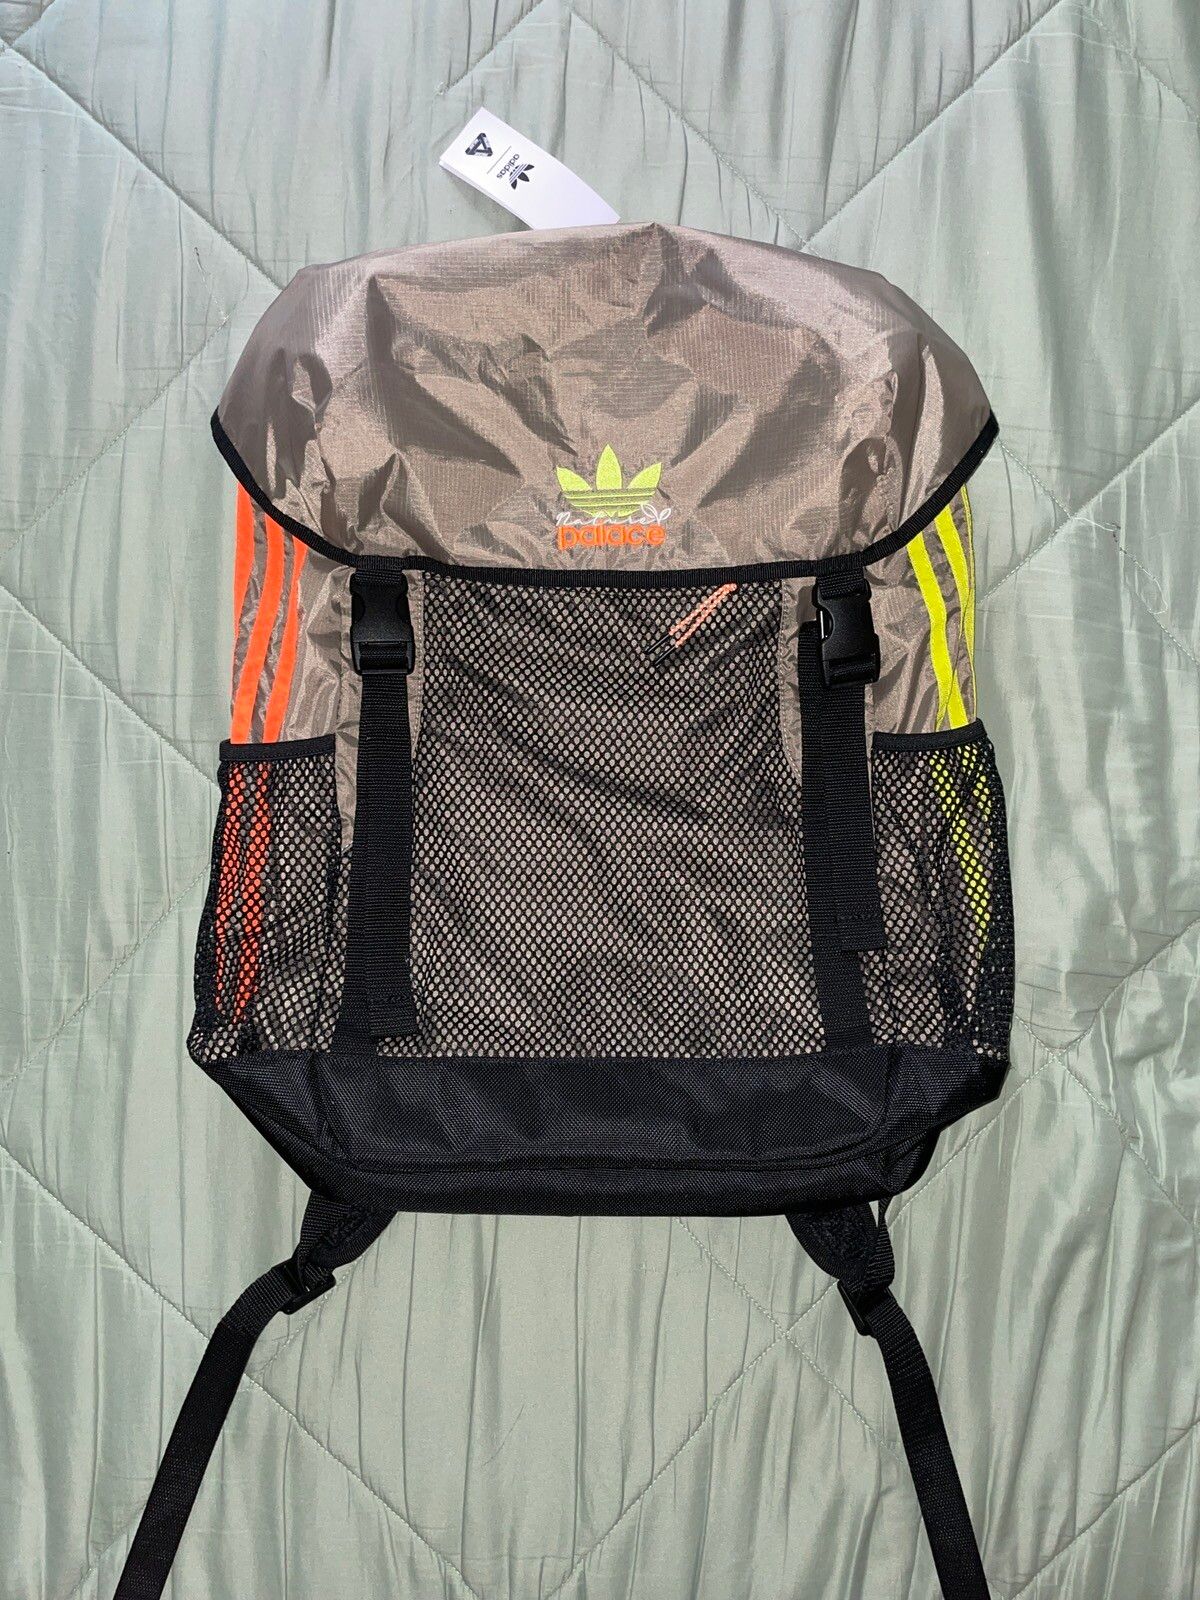 Palace Palace X Adidas Nature backpack | Grailed